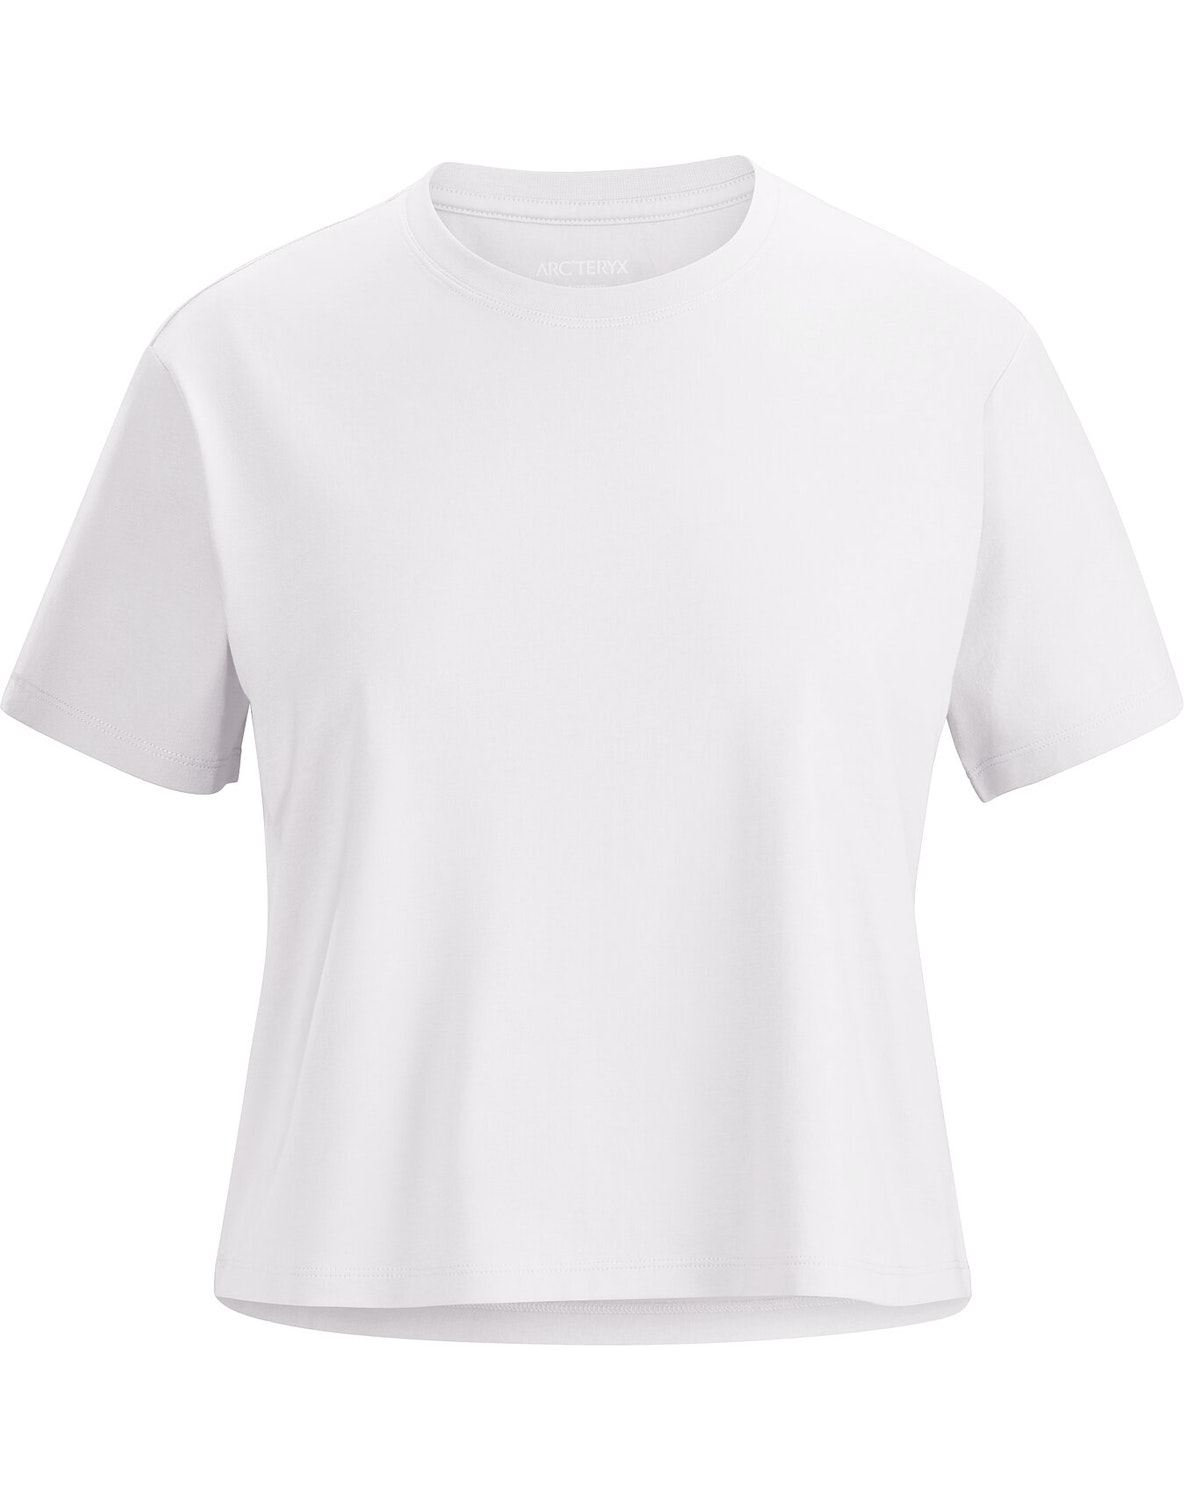 T-shirt Arc'teryx Cinder Donna Bianche - IT-3315763